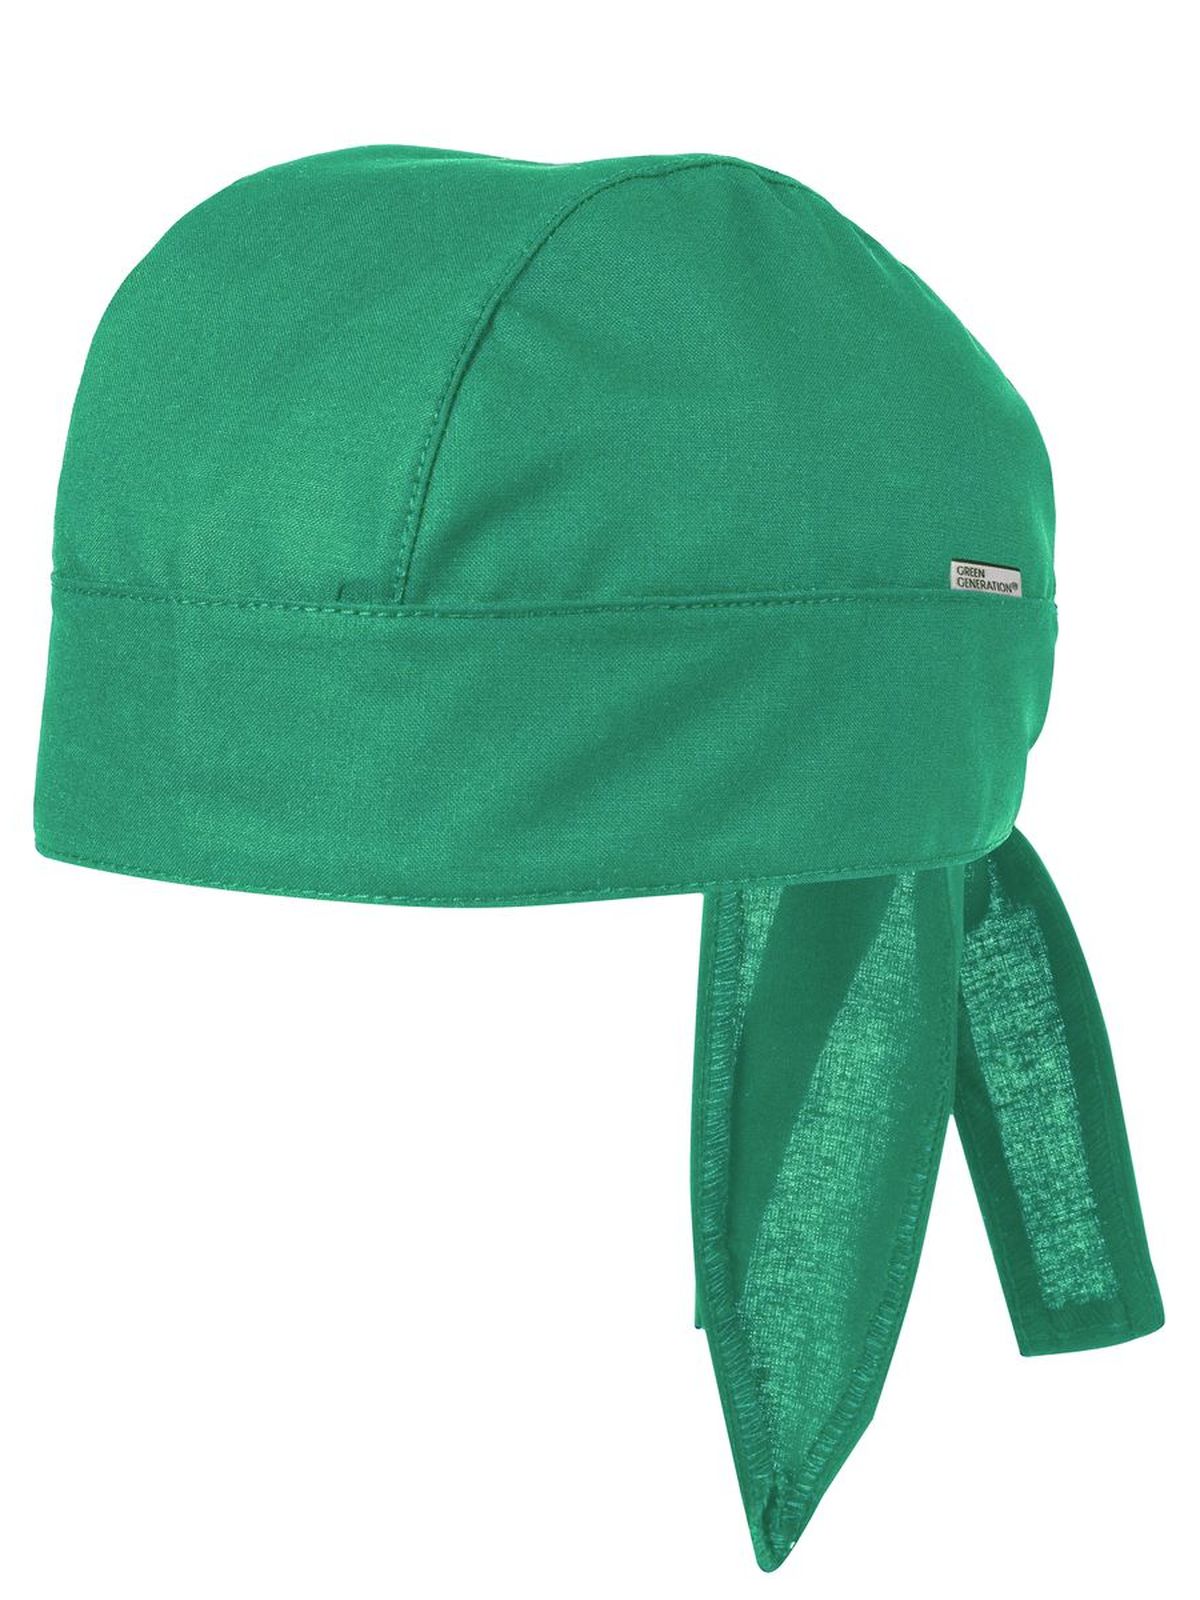 bandana-essential-emerald-green.webp